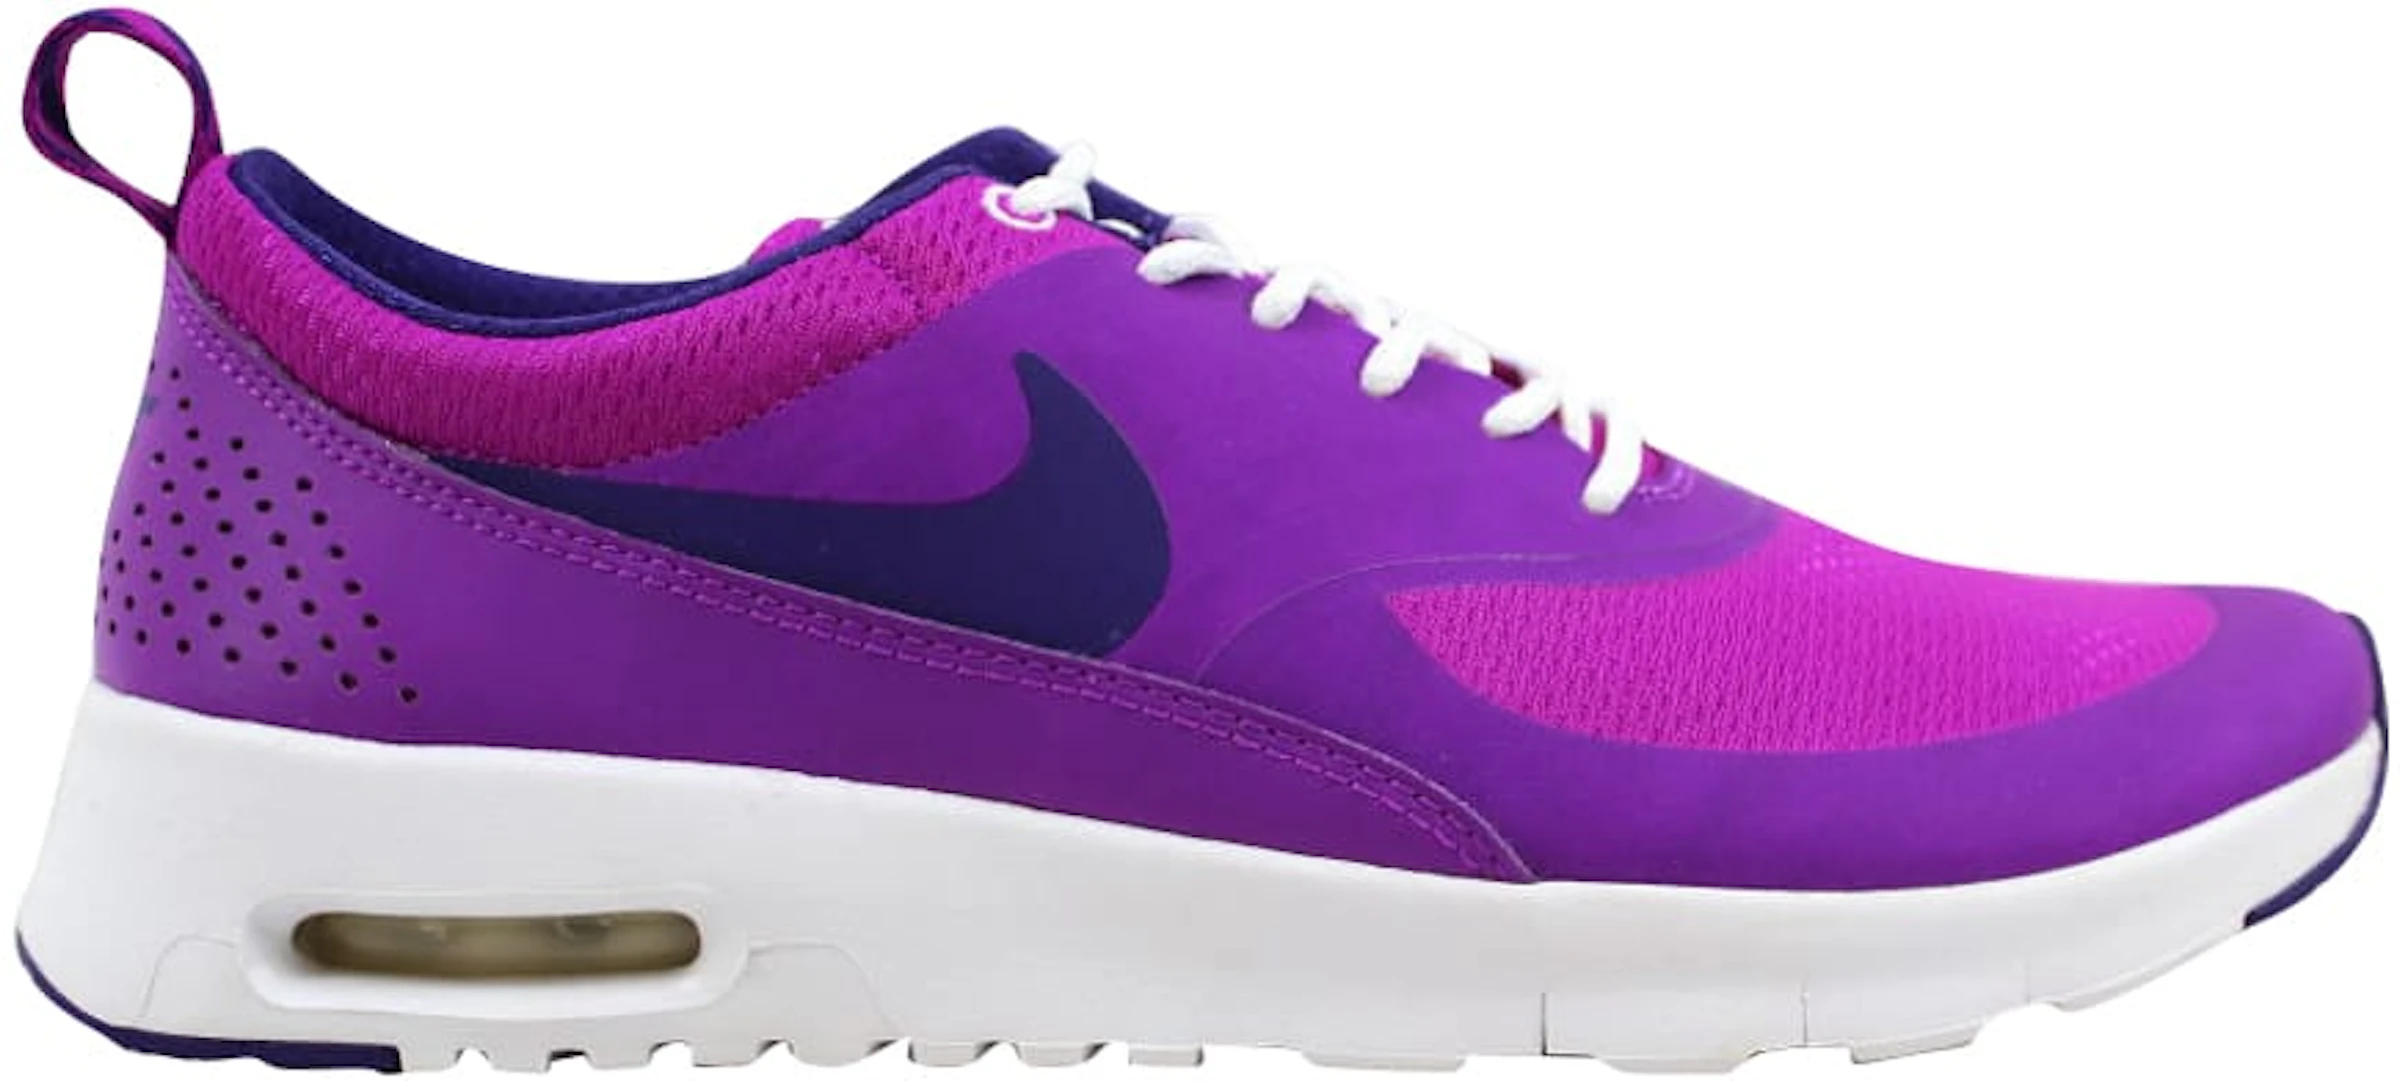 Nike Air Max Thea Violet (GS) - 814444-501 US